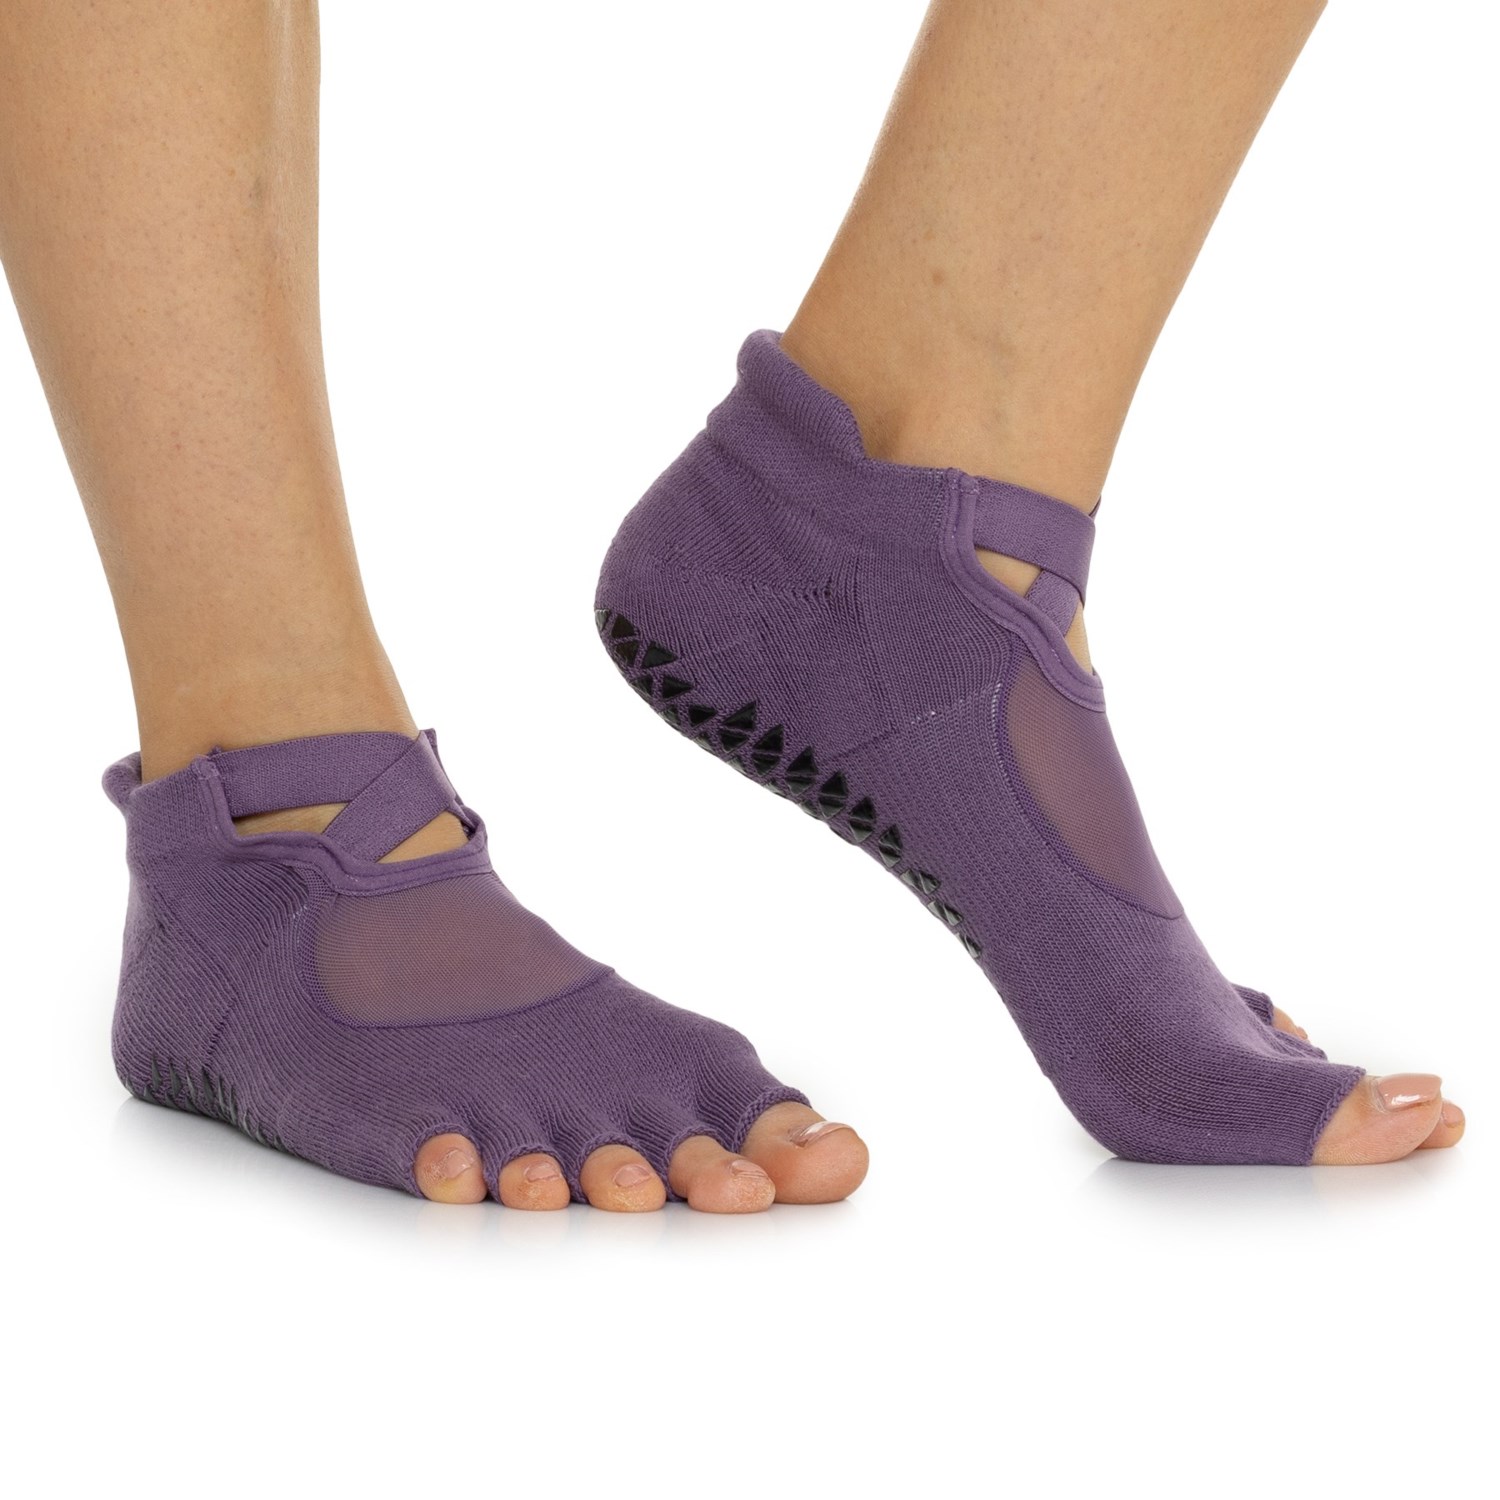 Pointe Studio Medium-Large - Clean Cut Toeless Grip Socks (For